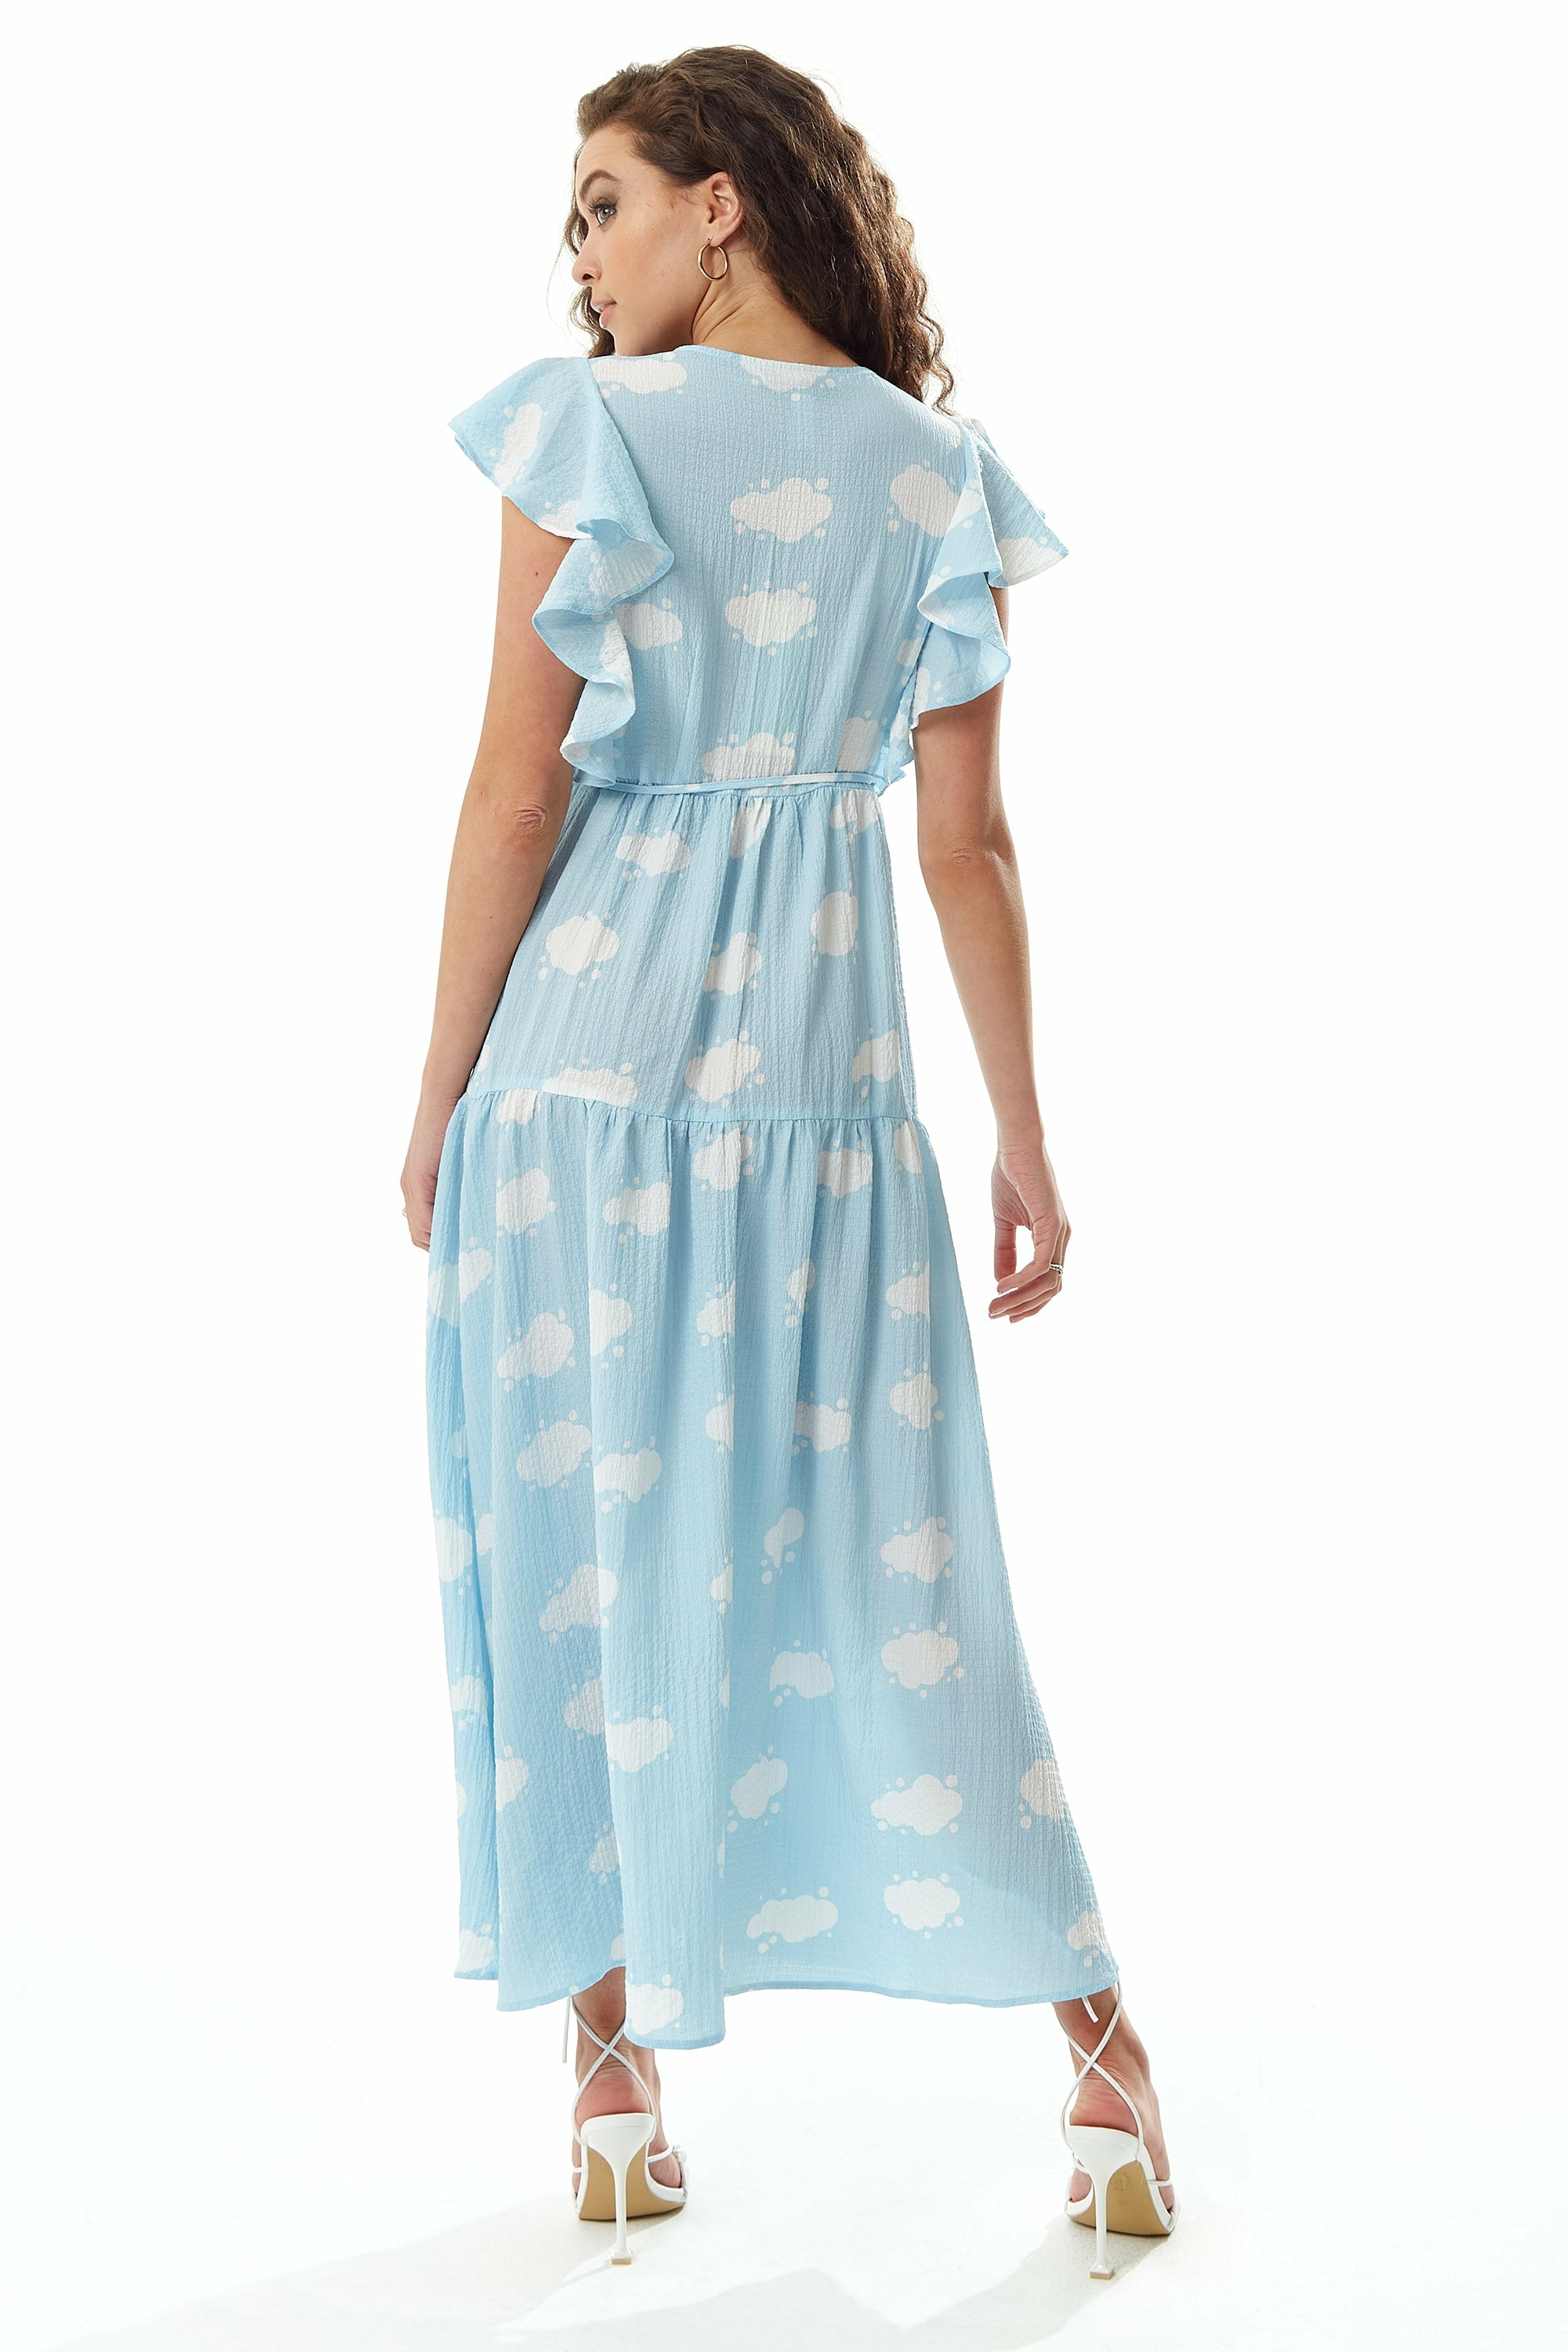 Liquorish cloud Print Midi Wrap Dress with Frill Sleeves in Blue Liquorish